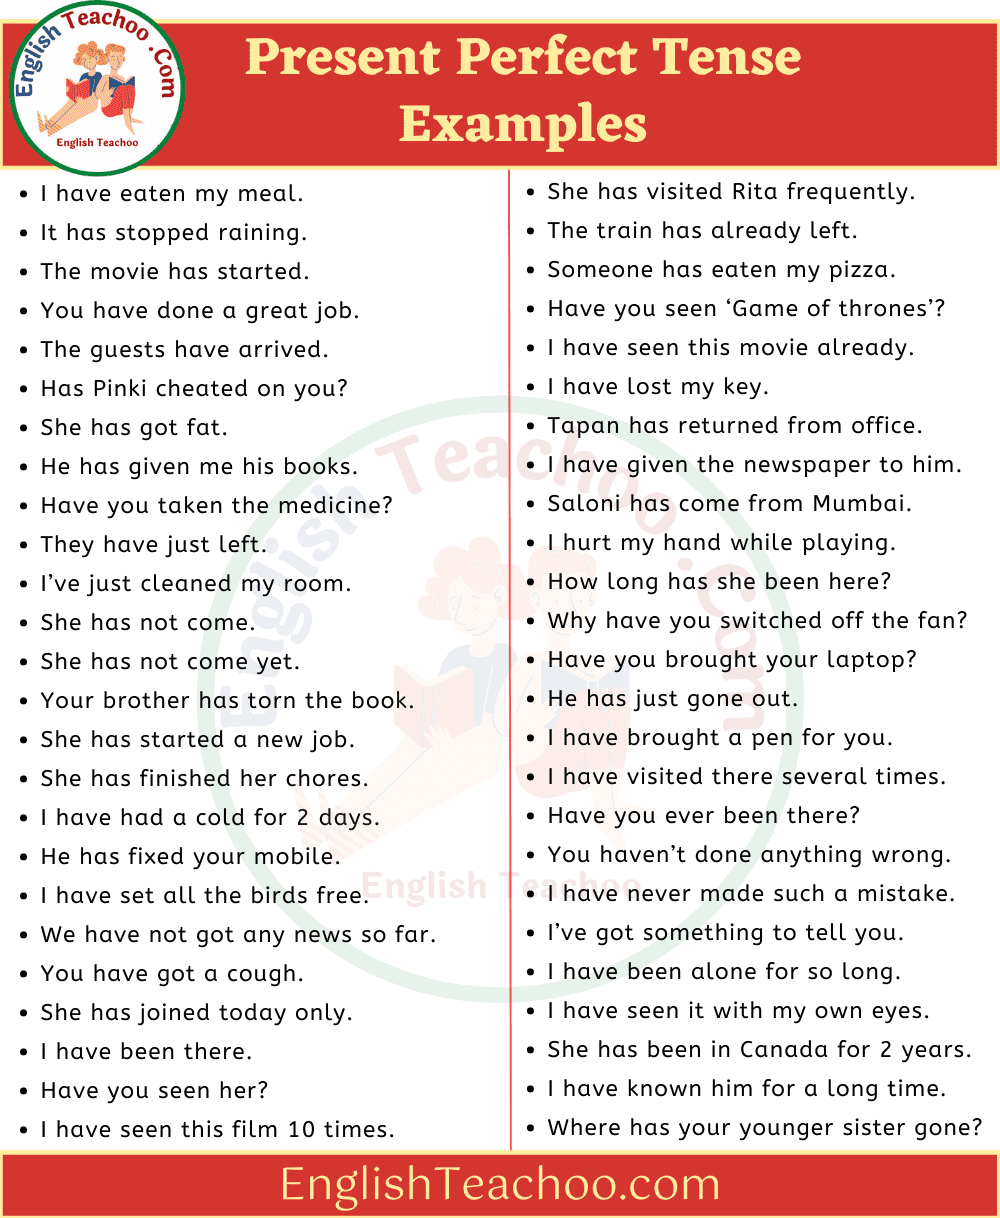 Examples For Present Perfect Tense EnglishTeachoo